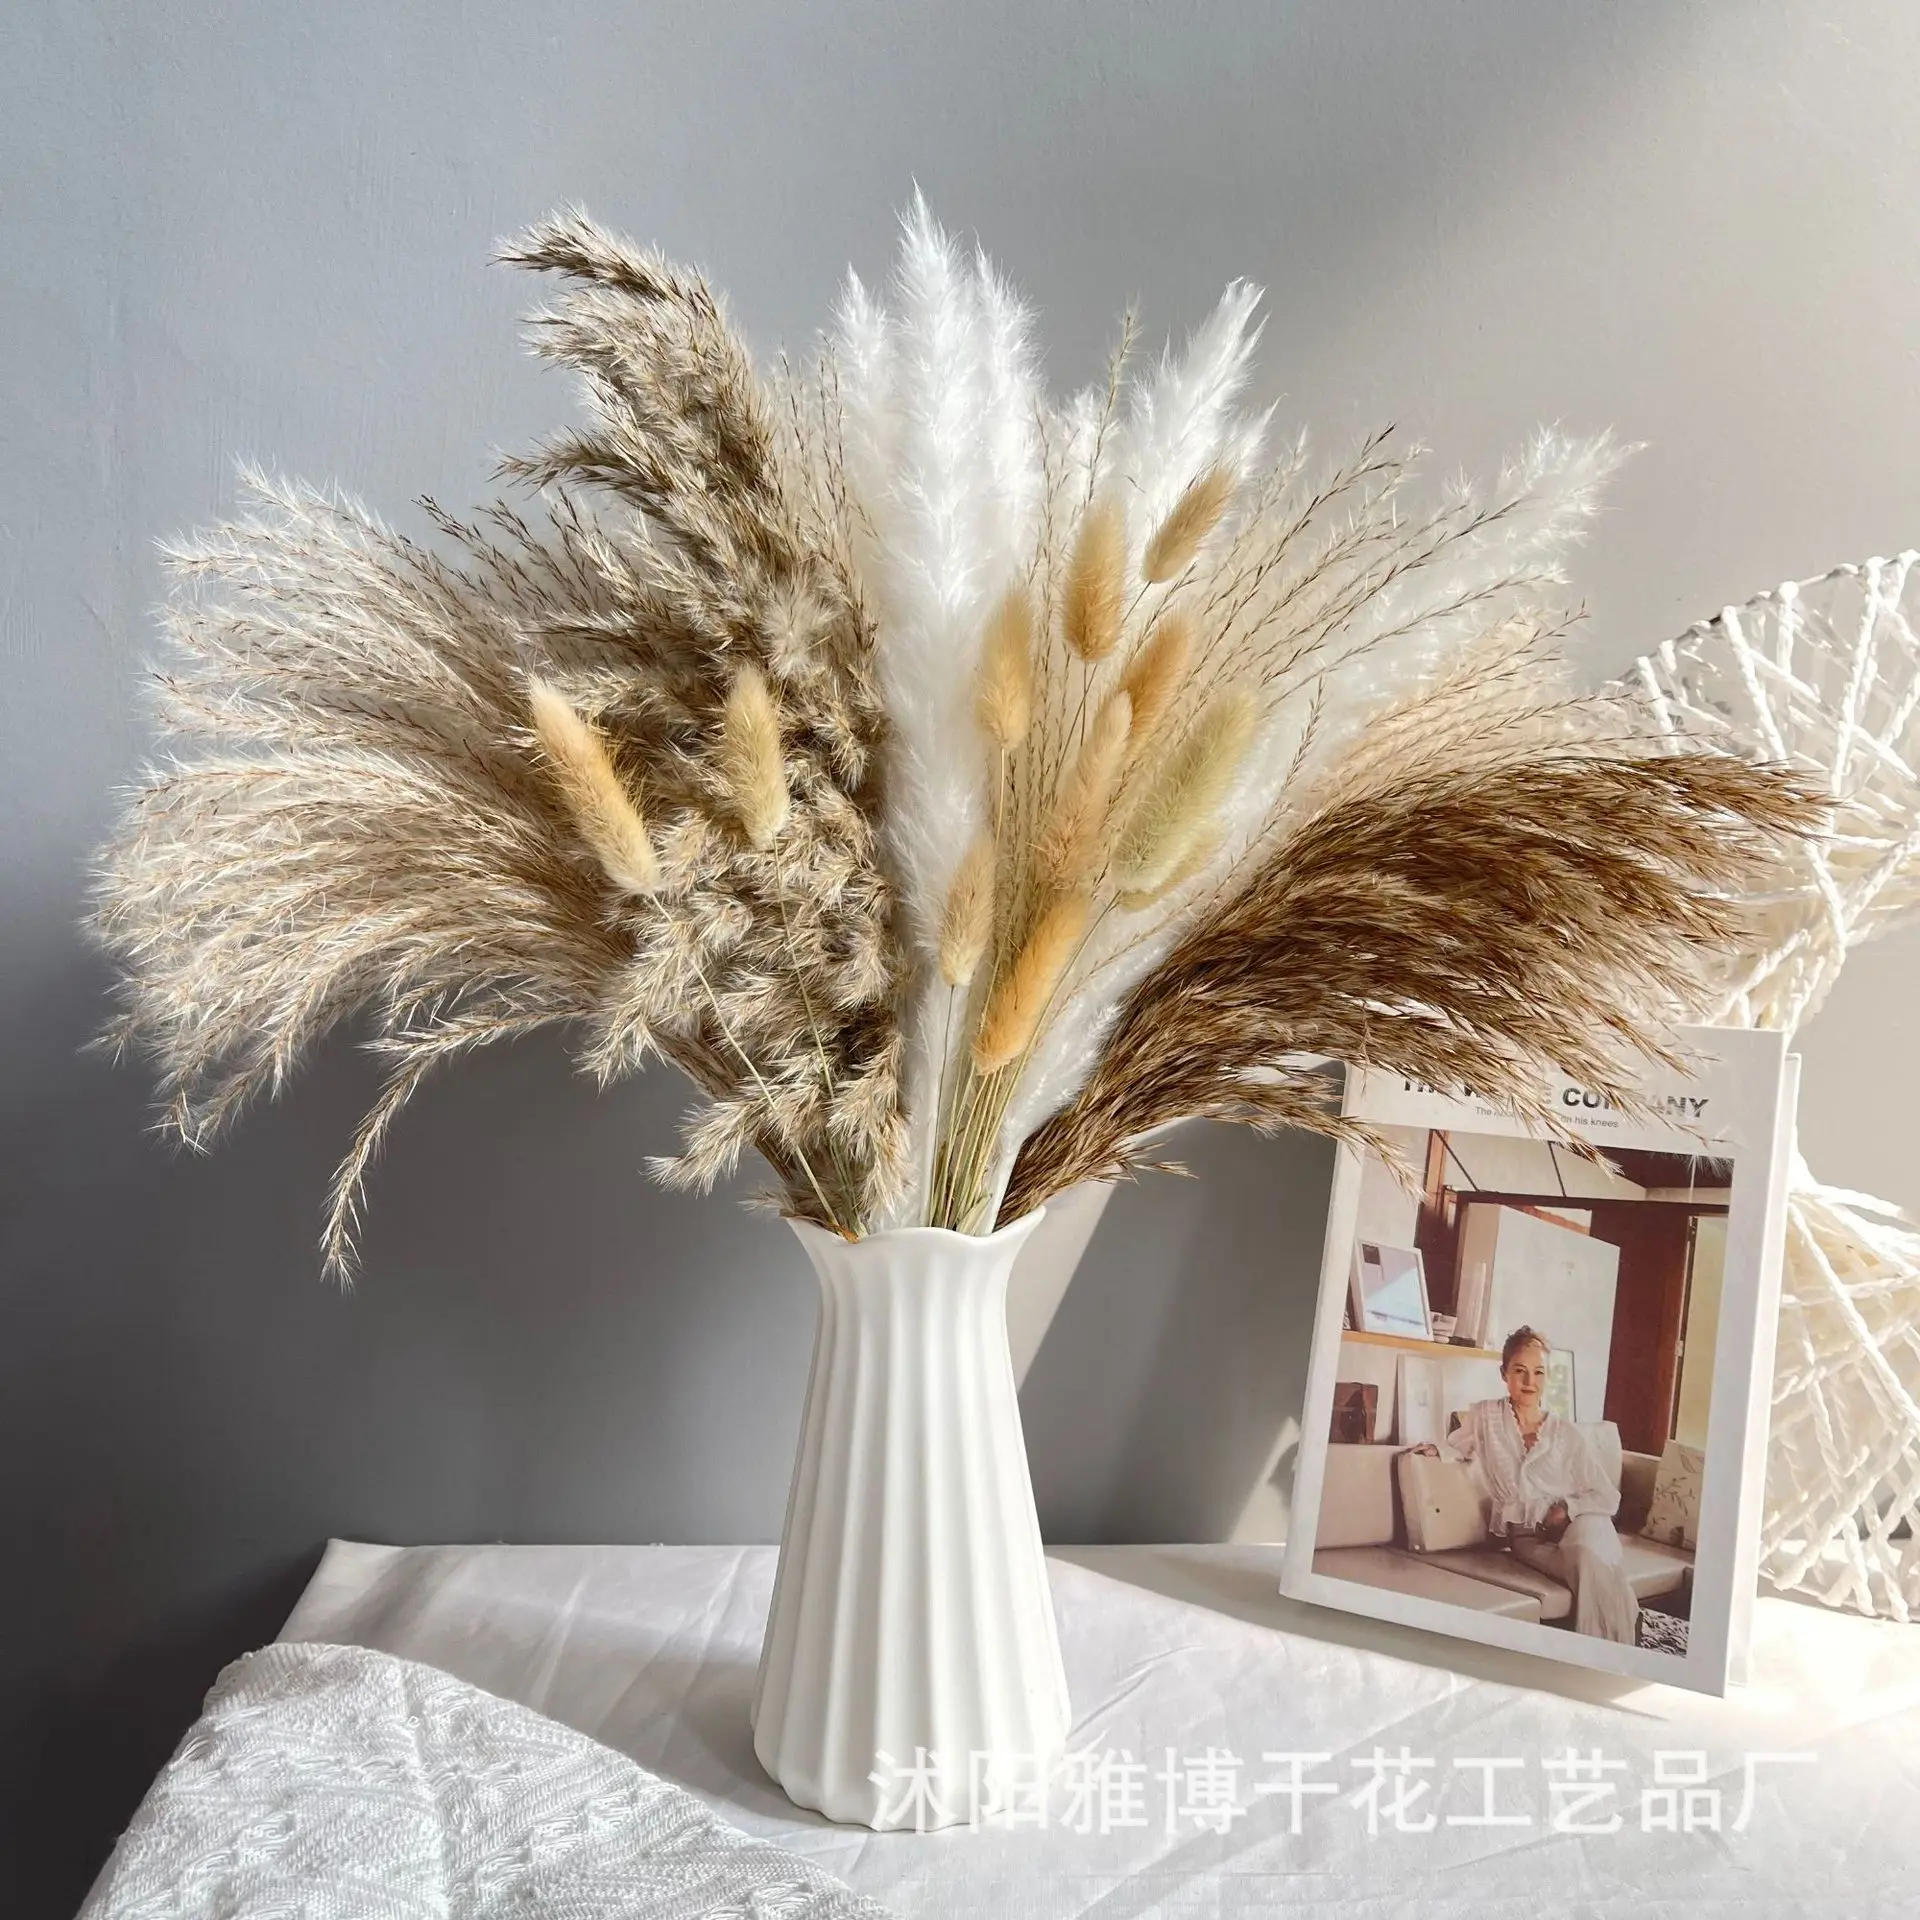 silk flower artificial & dried flora Reed Pars grass set immortal bouquet window decoration ornaments whisk flower dried flower wedding props decor dried wildflowers